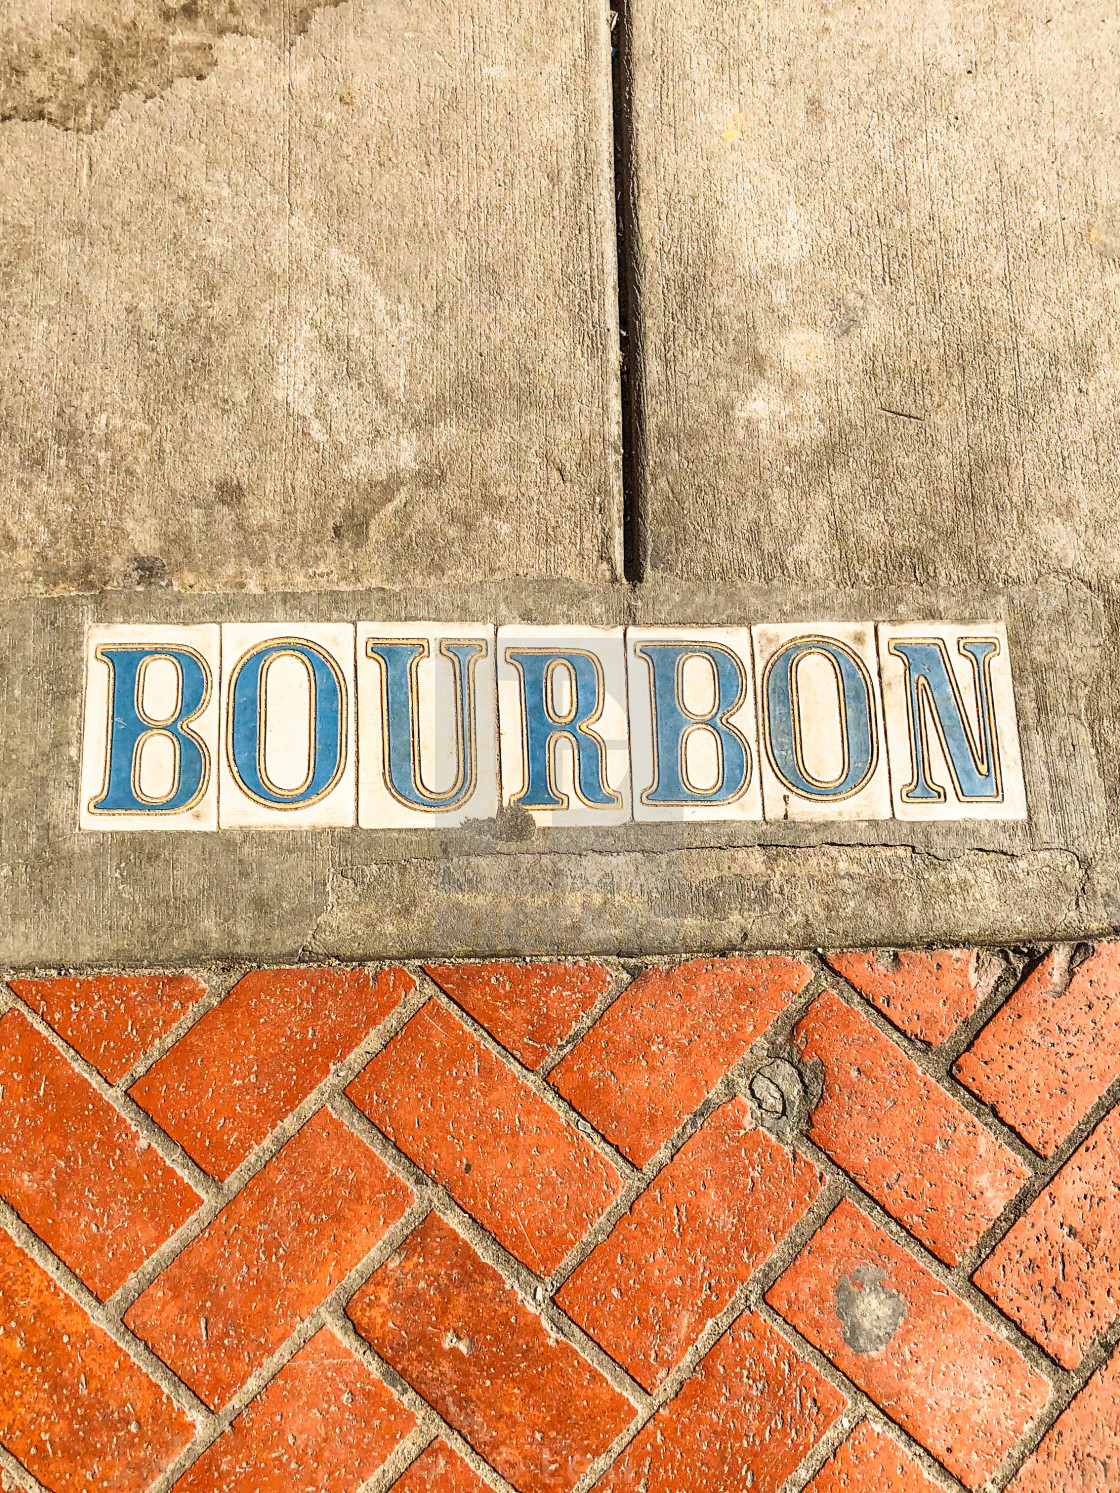 "Bourbon Street" stock image